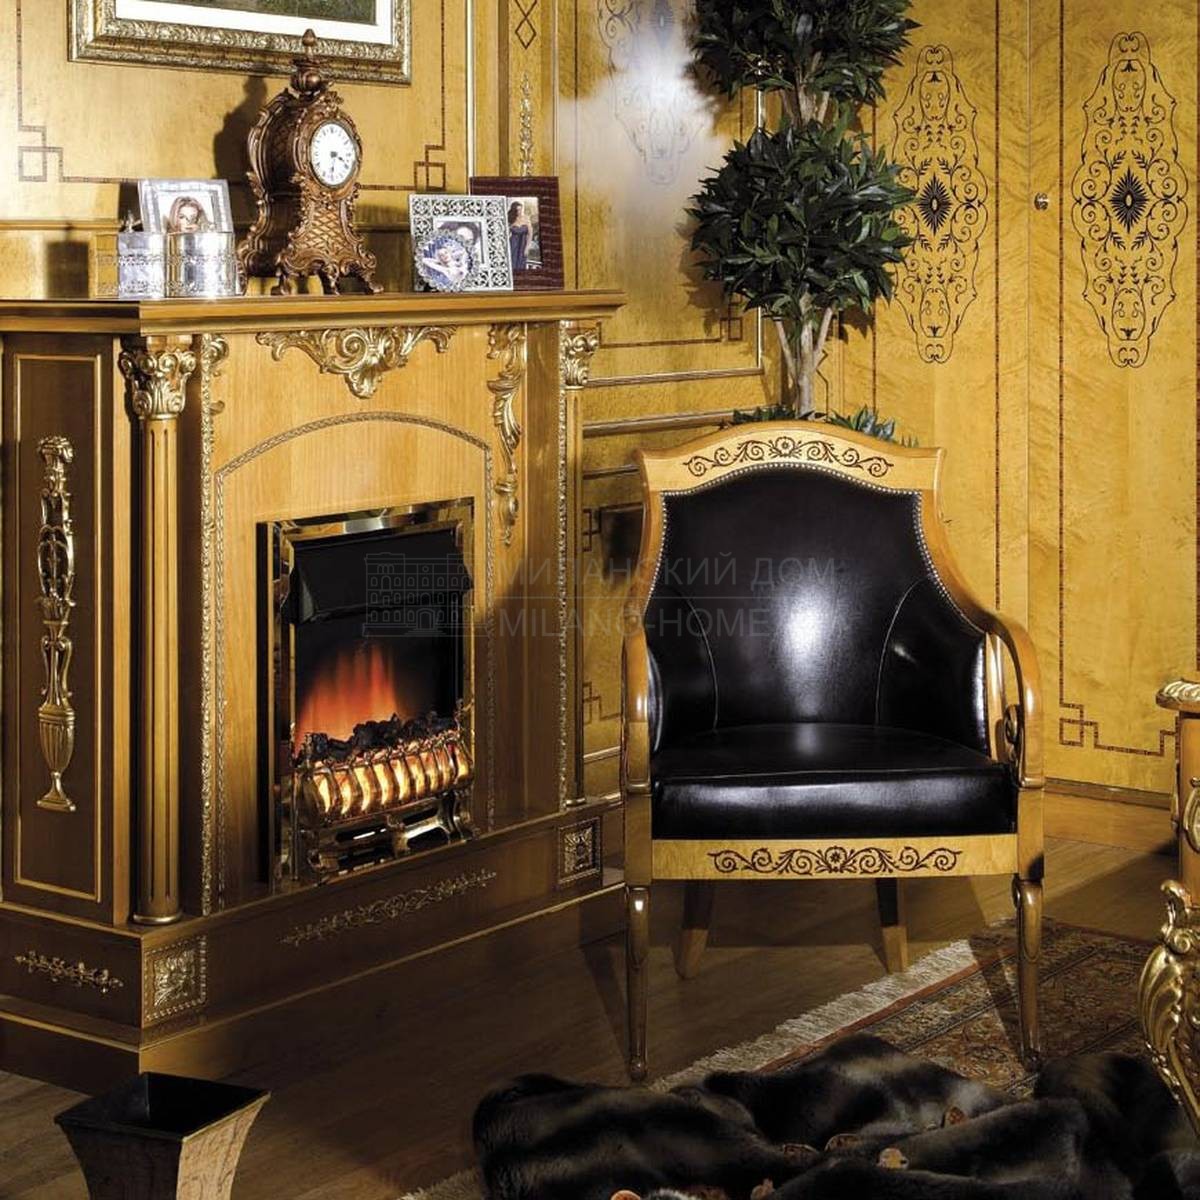 Кресло LC 1202 Klimt/guest’s chair из Италии фабрики ASNAGHI INTERIORS